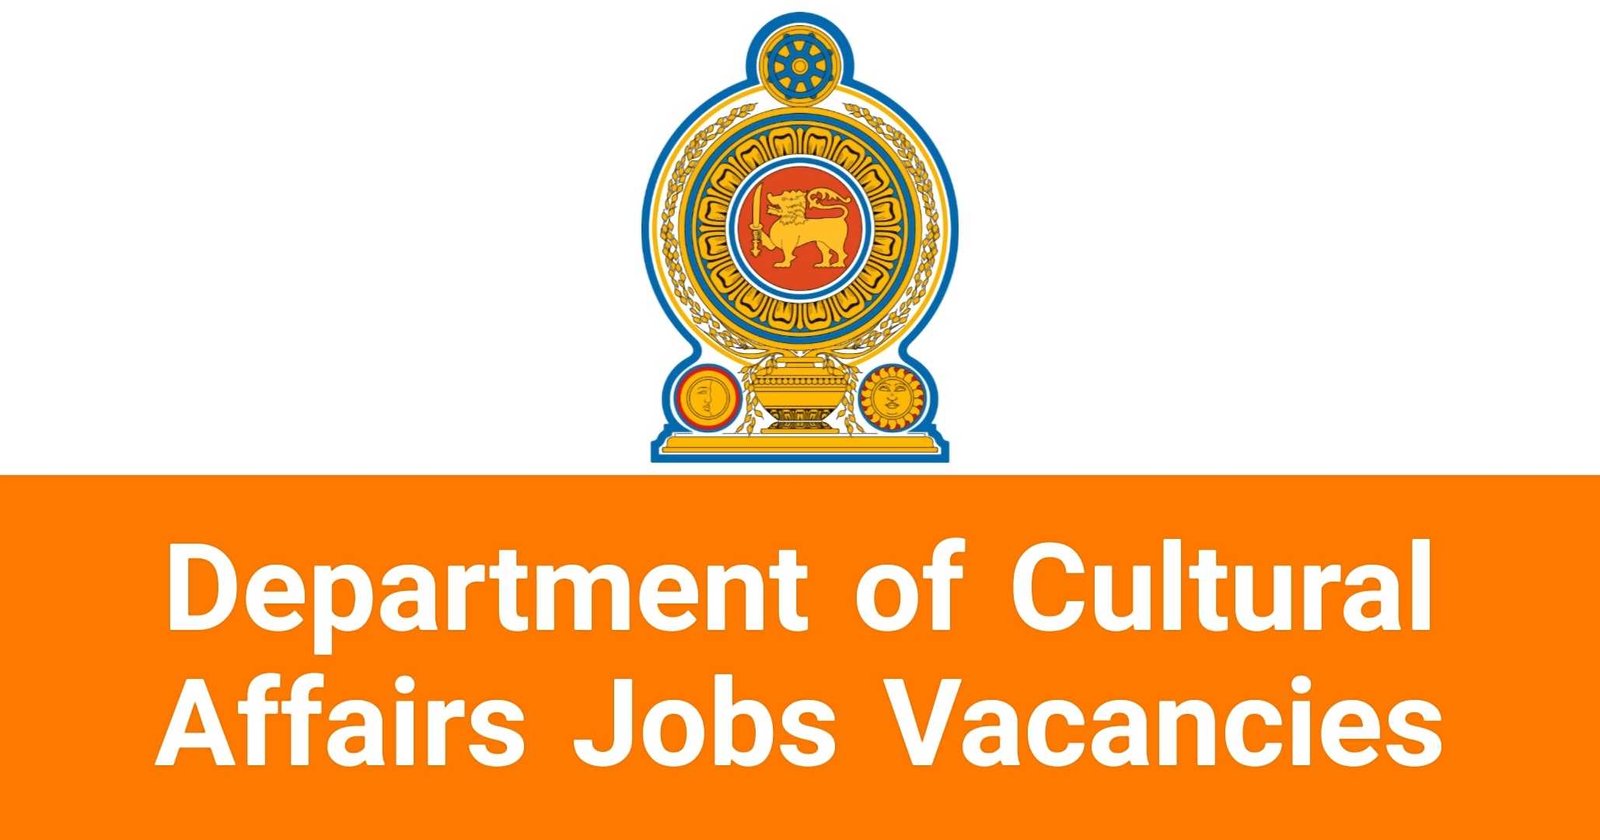 Department of Cultural Affairs Jobs Vacancies Careers